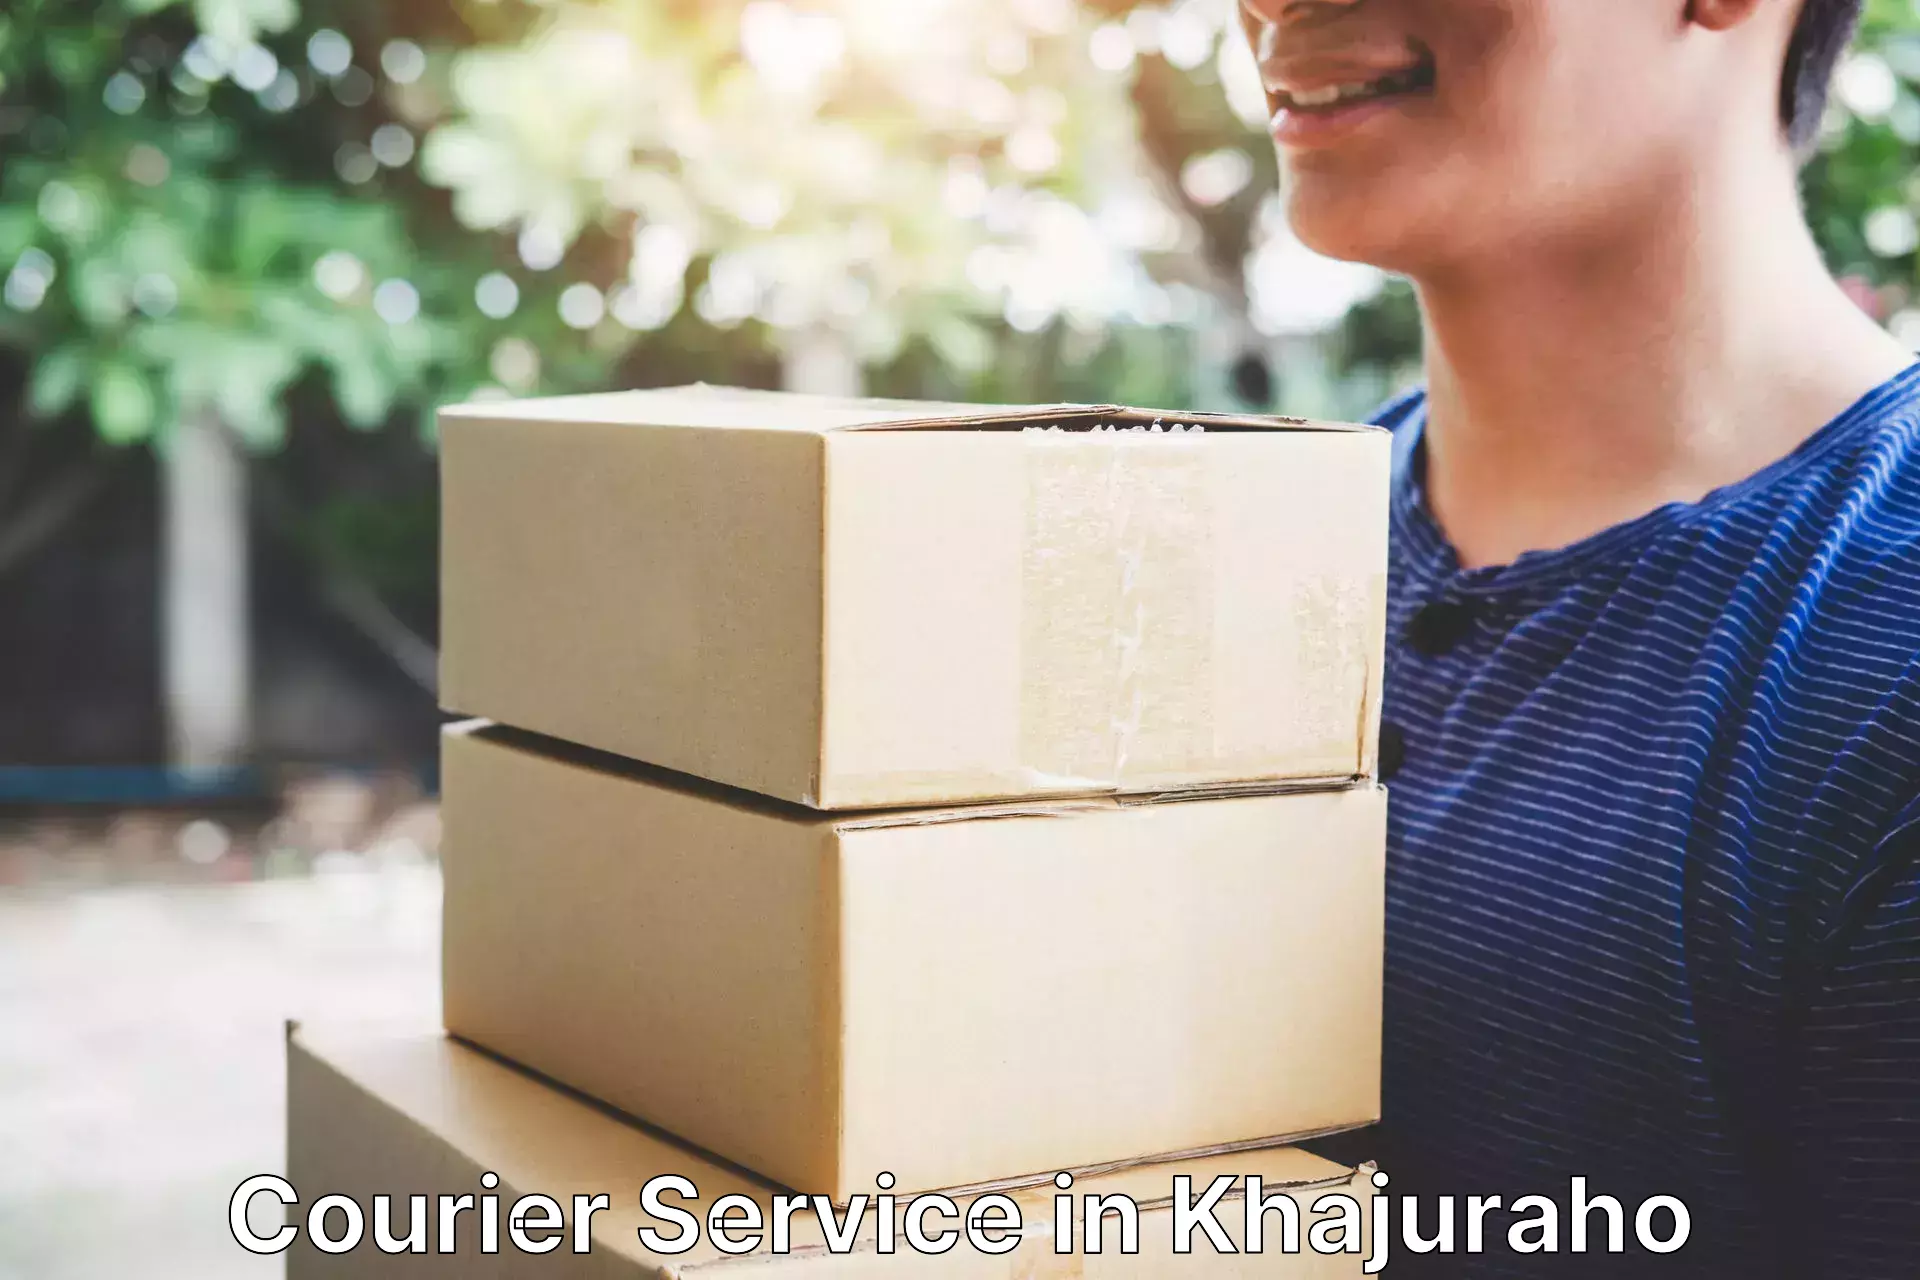 Professional parcel services in Khajuraho